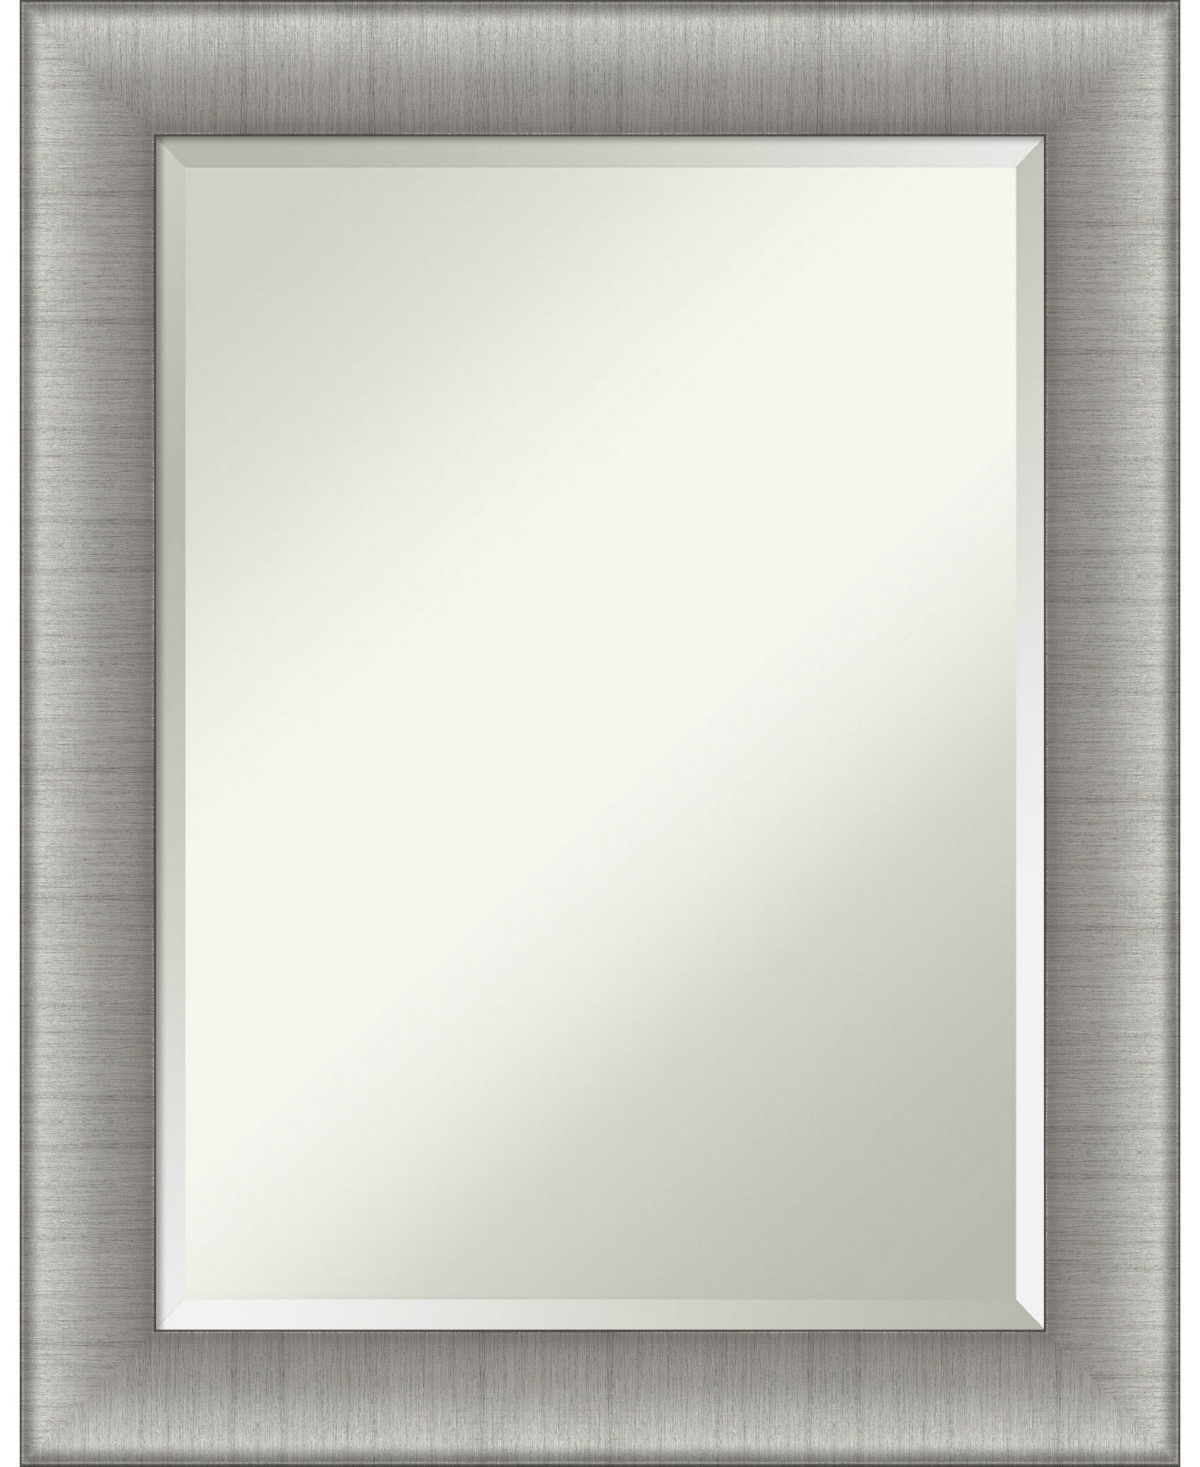 Elegant Brushed Framed Bathroom Vanity Wall Mirror, 22.75" x 28.75" - Silver